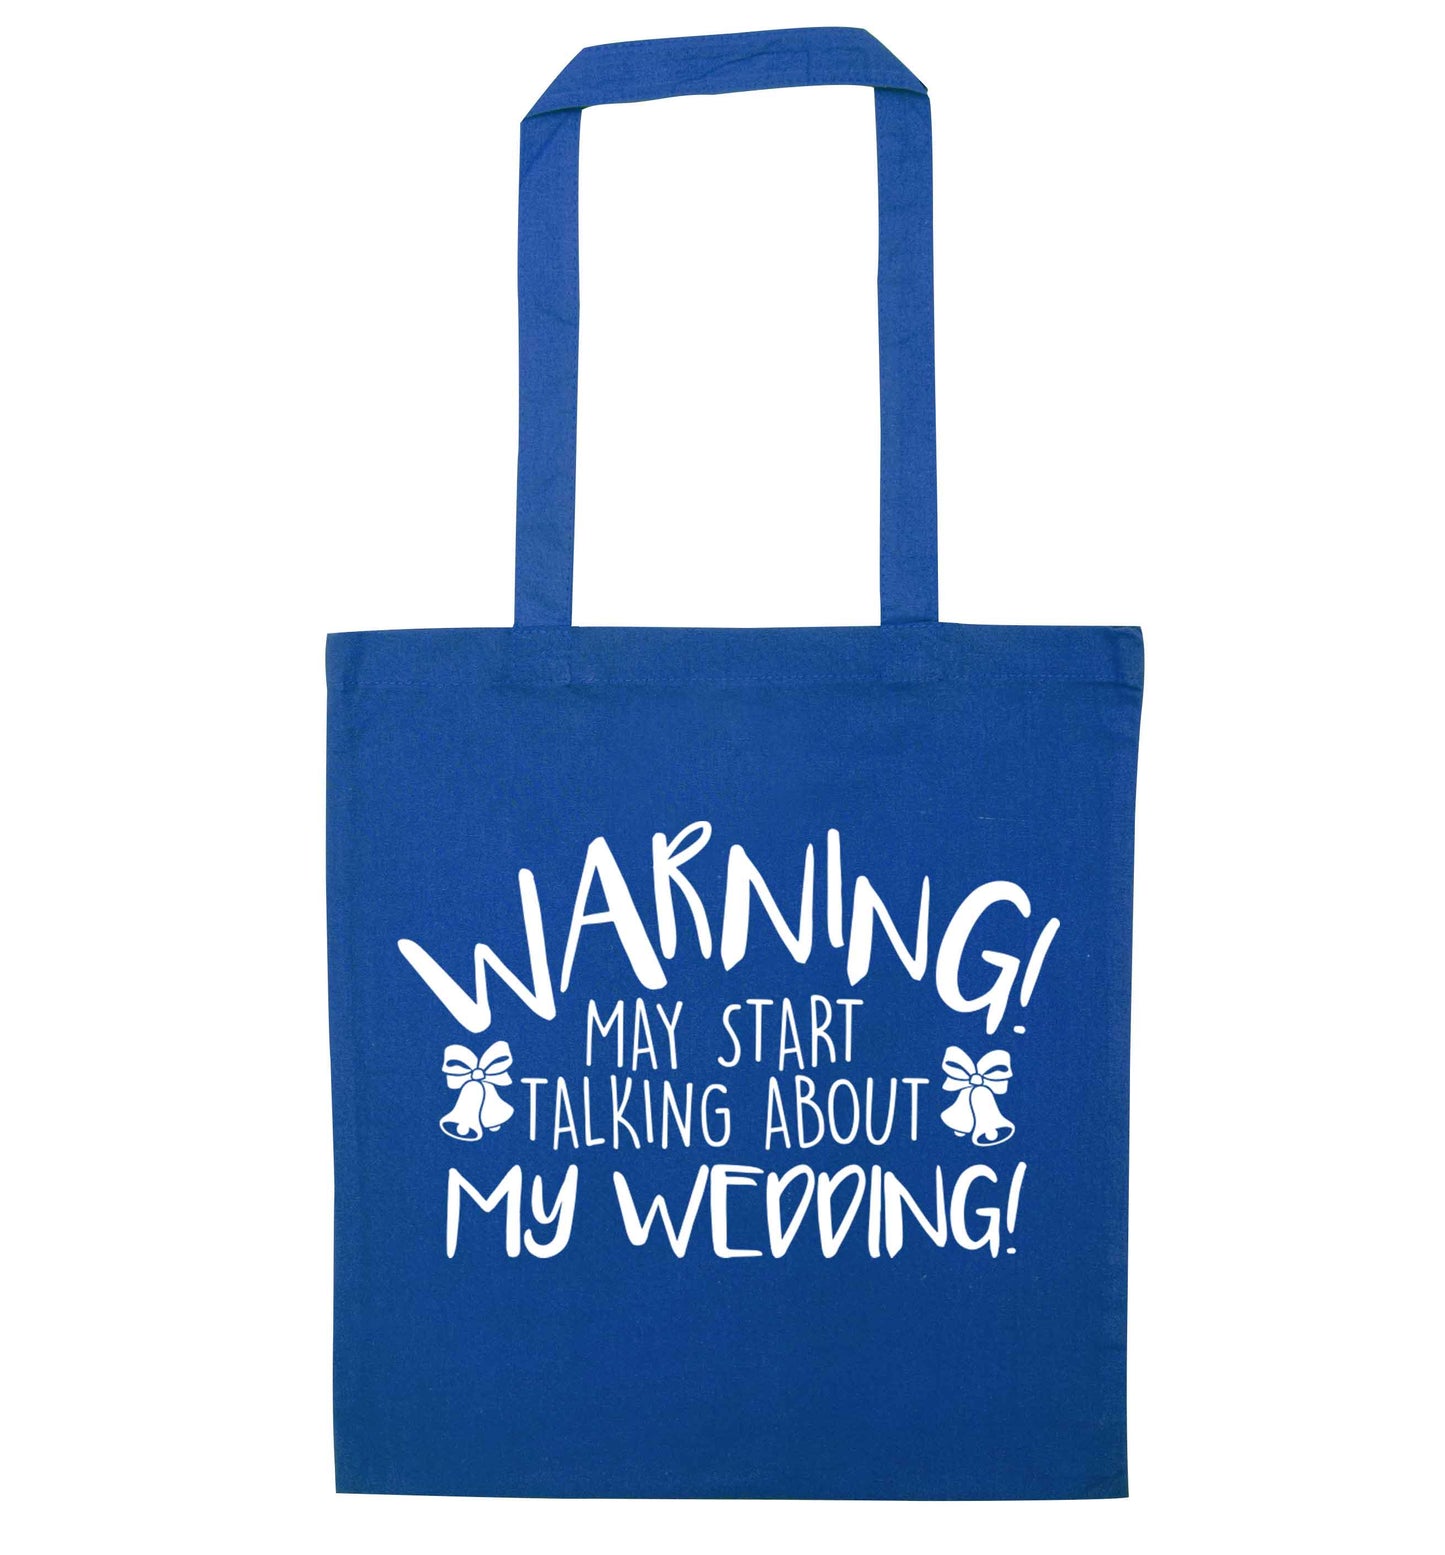 Warning may start talking about my wedding! blue tote bag